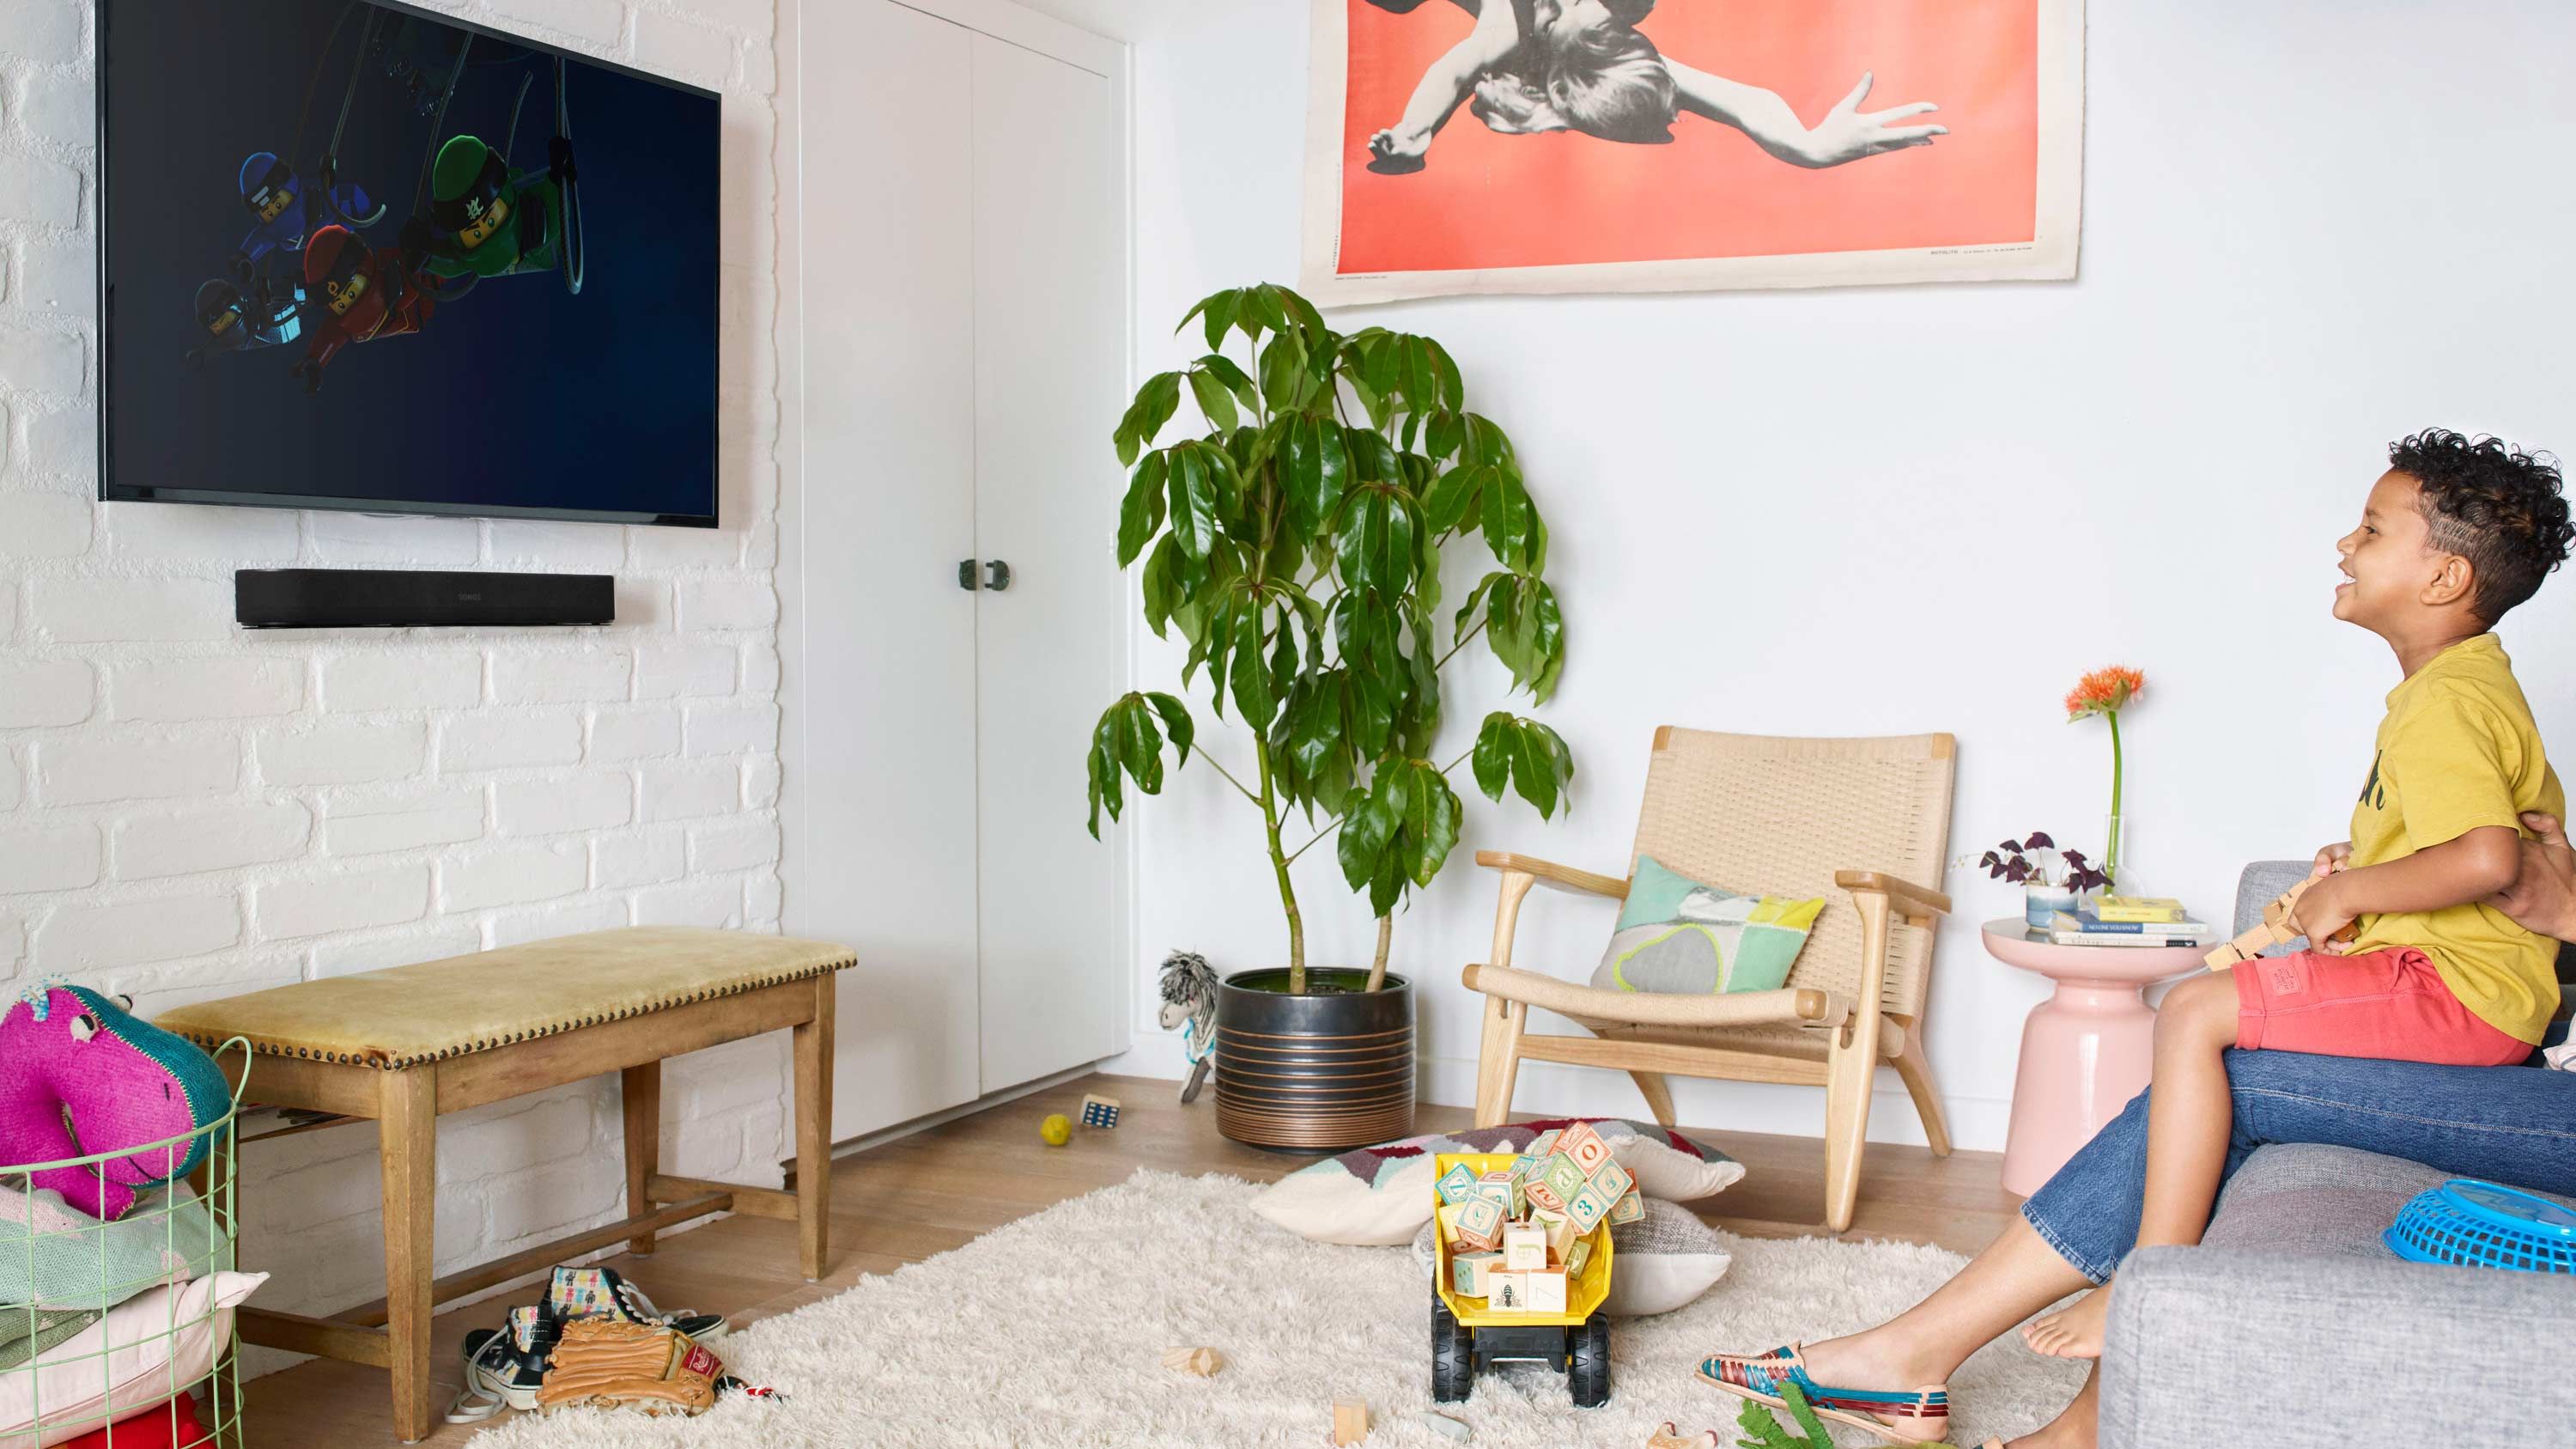 Sonos image of kid watching tv